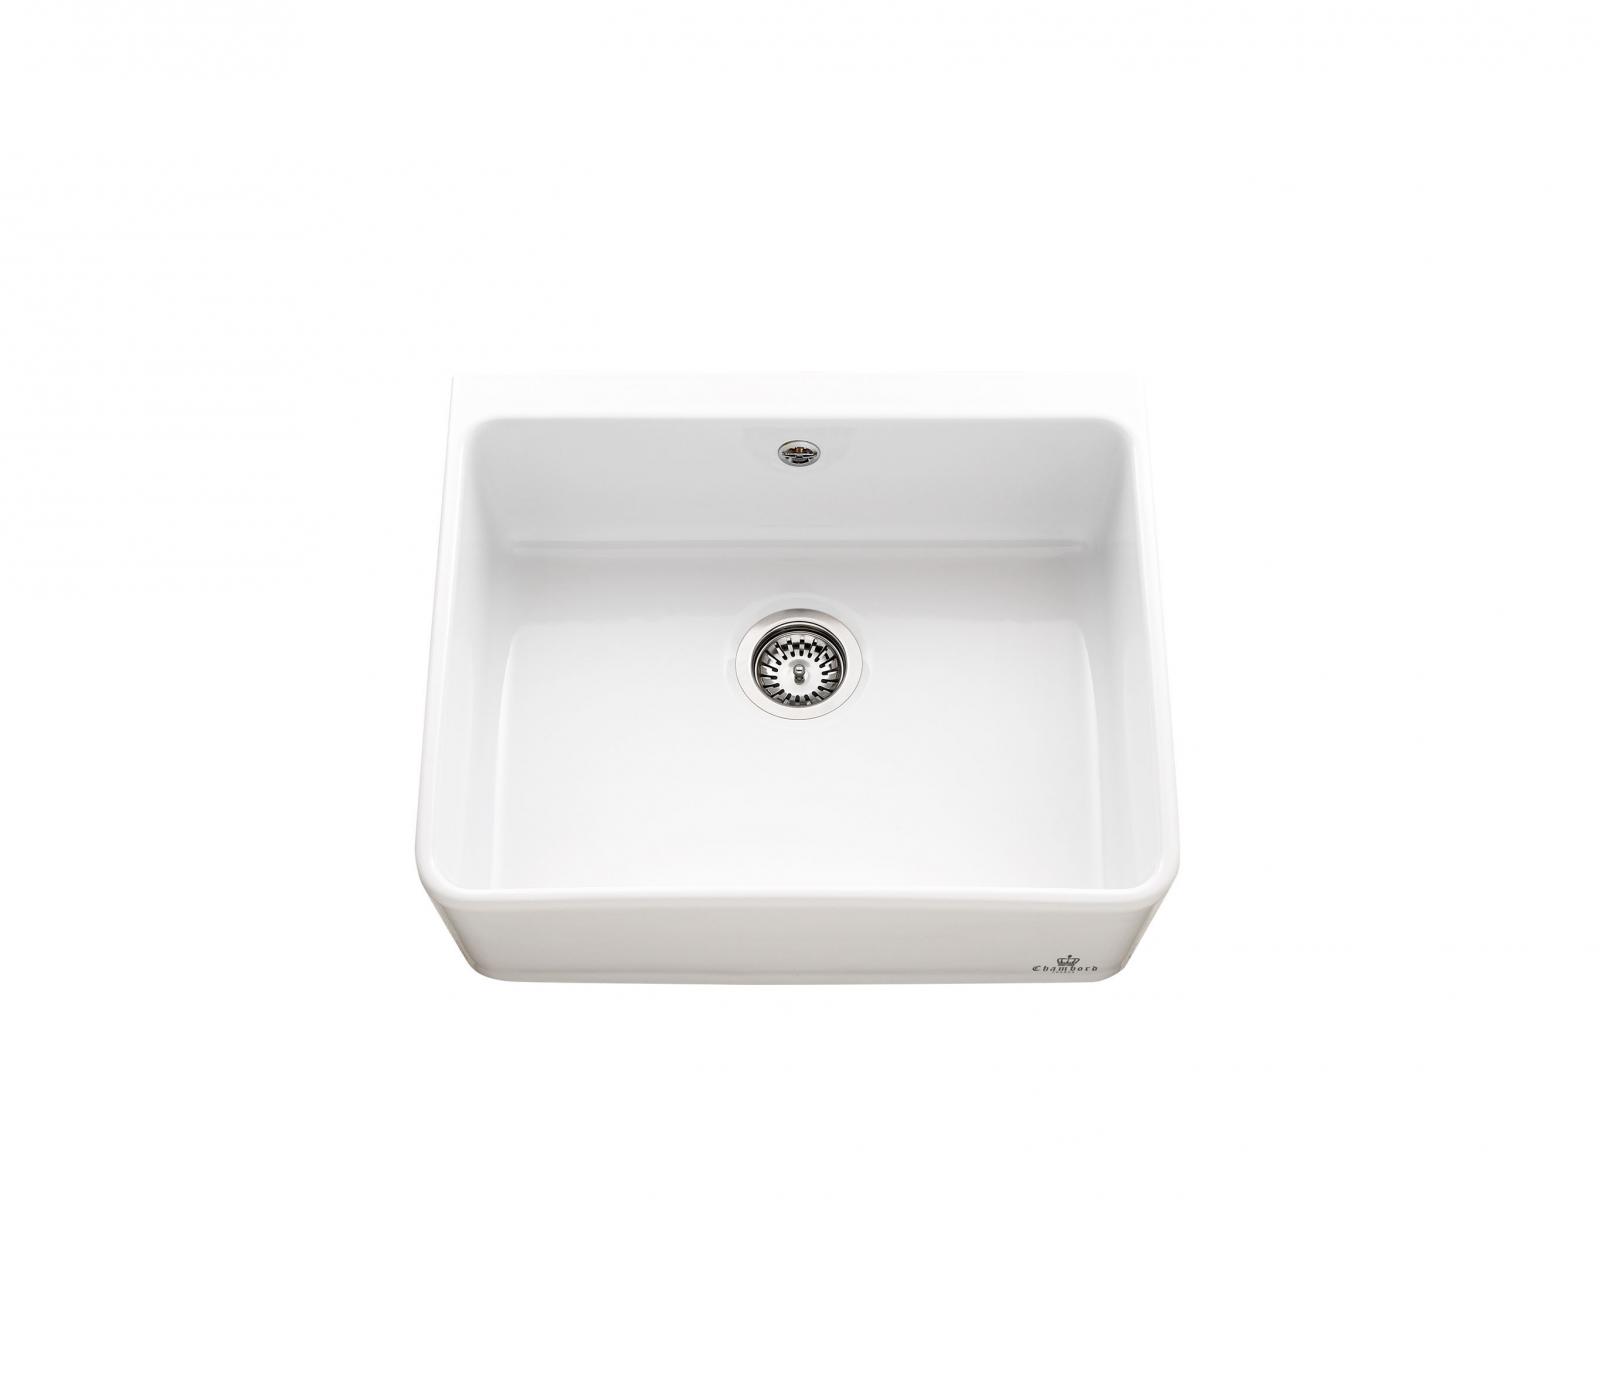 High-quality sink Clotaire I - single bowl, ceramic